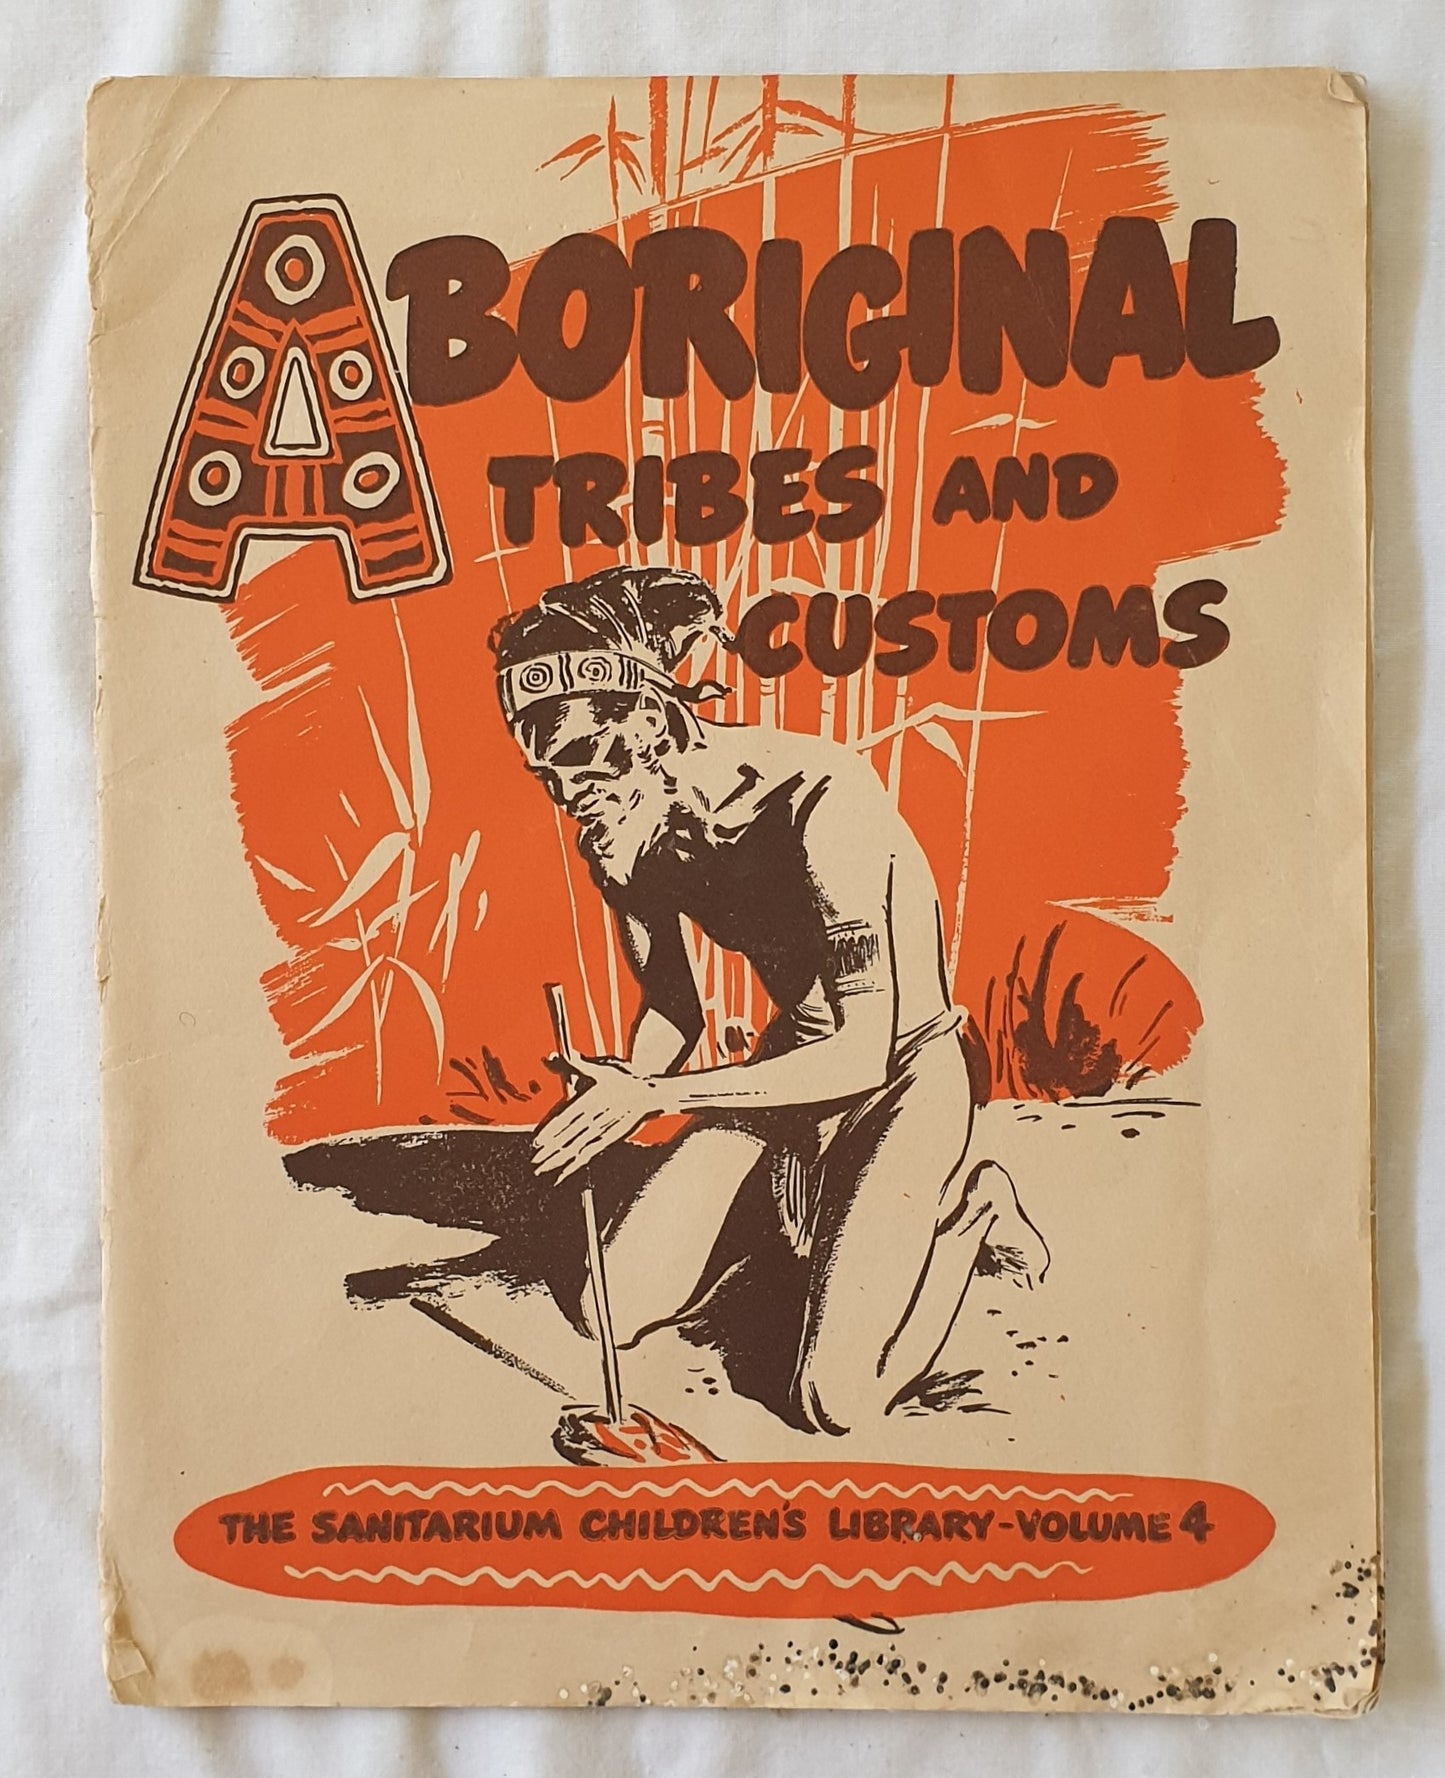 Aboriginal Tribes and Customs The Sanitarium Children’s Library – Volume 4